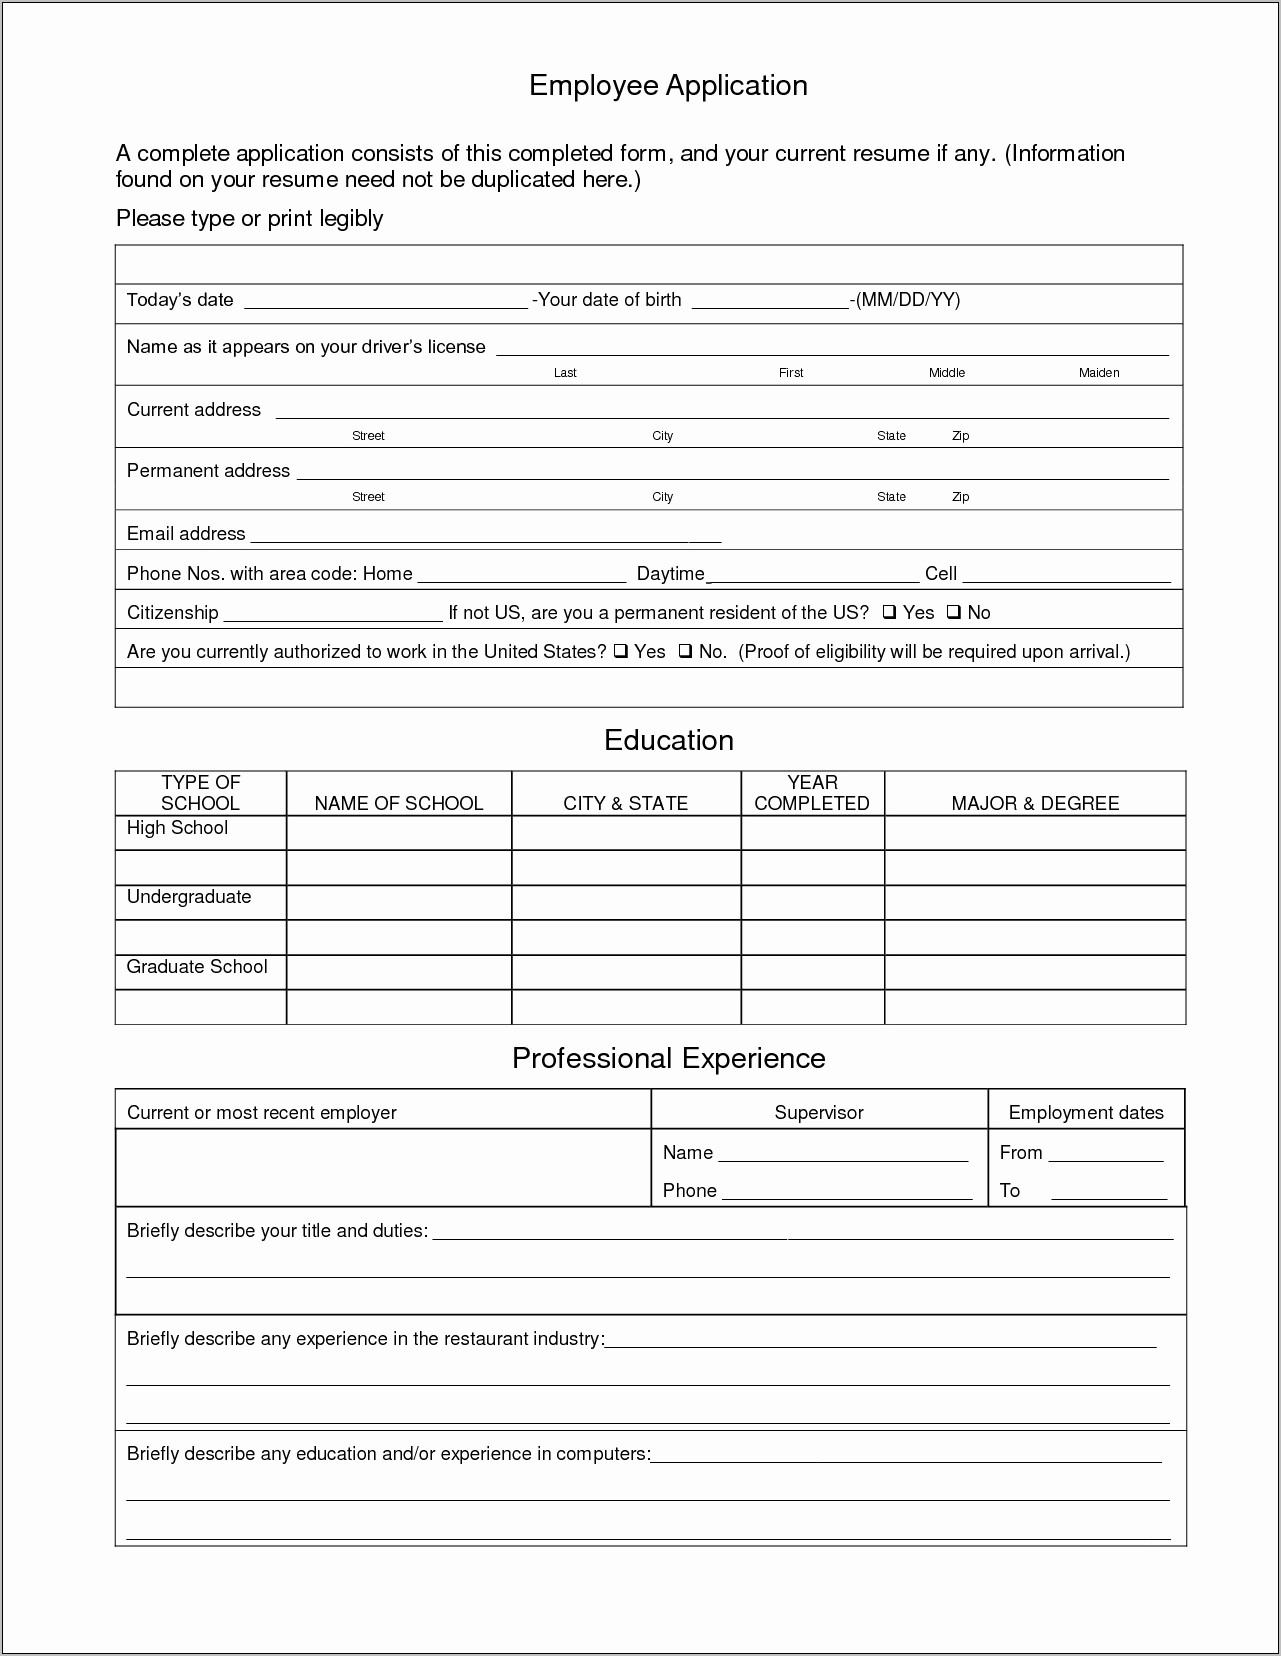 Restaurant Application Form Template